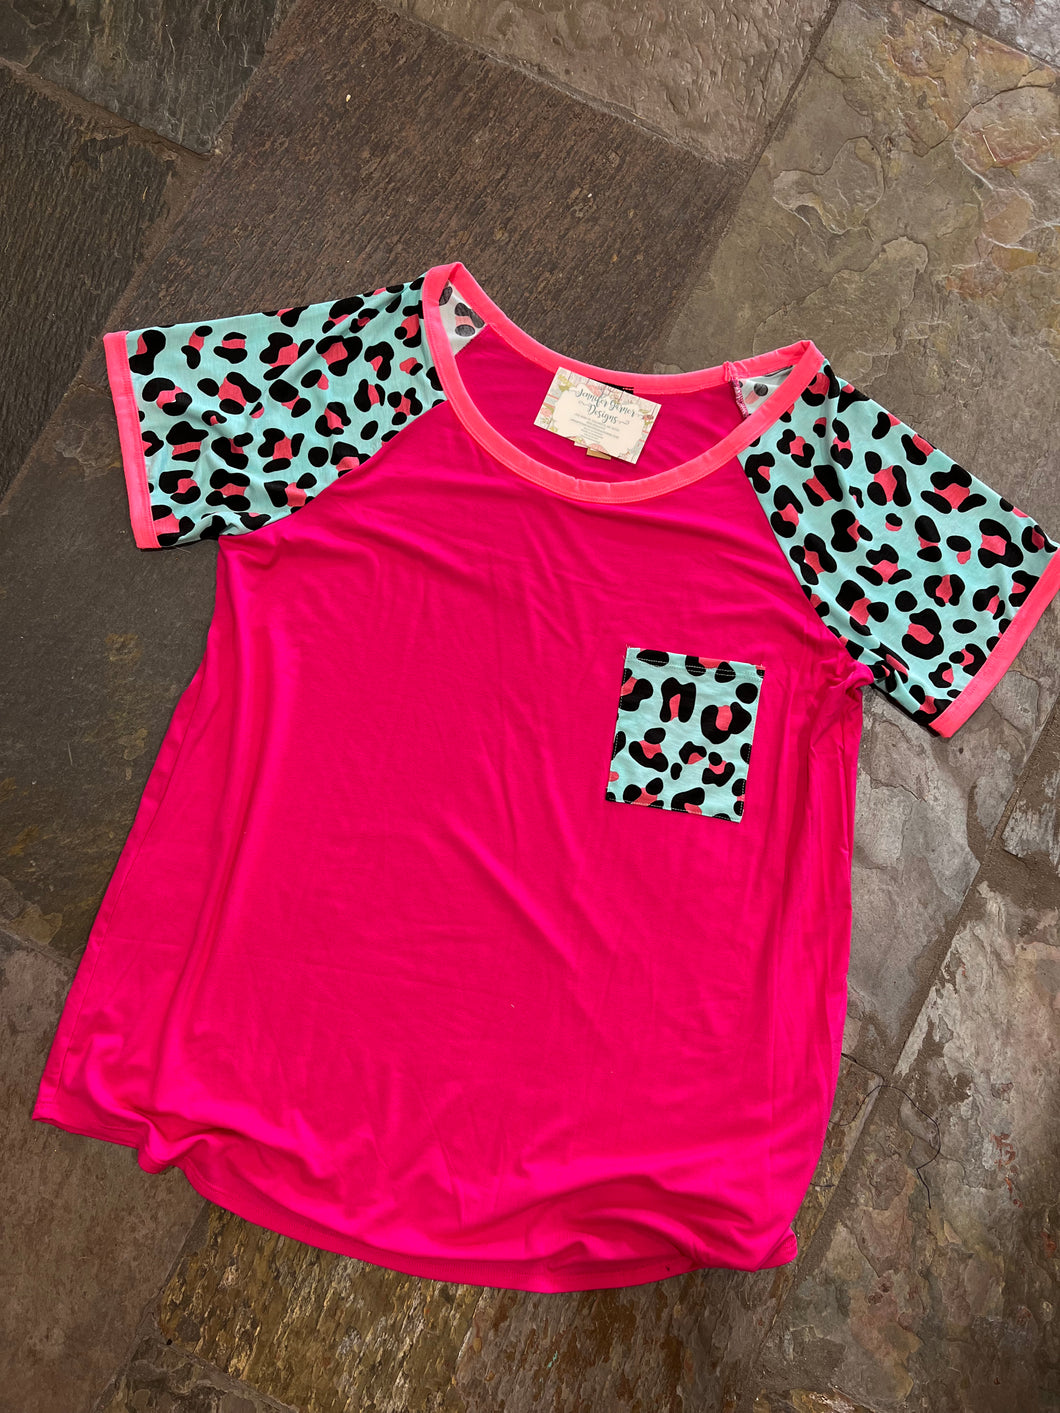 Pink Cheetah Shirt